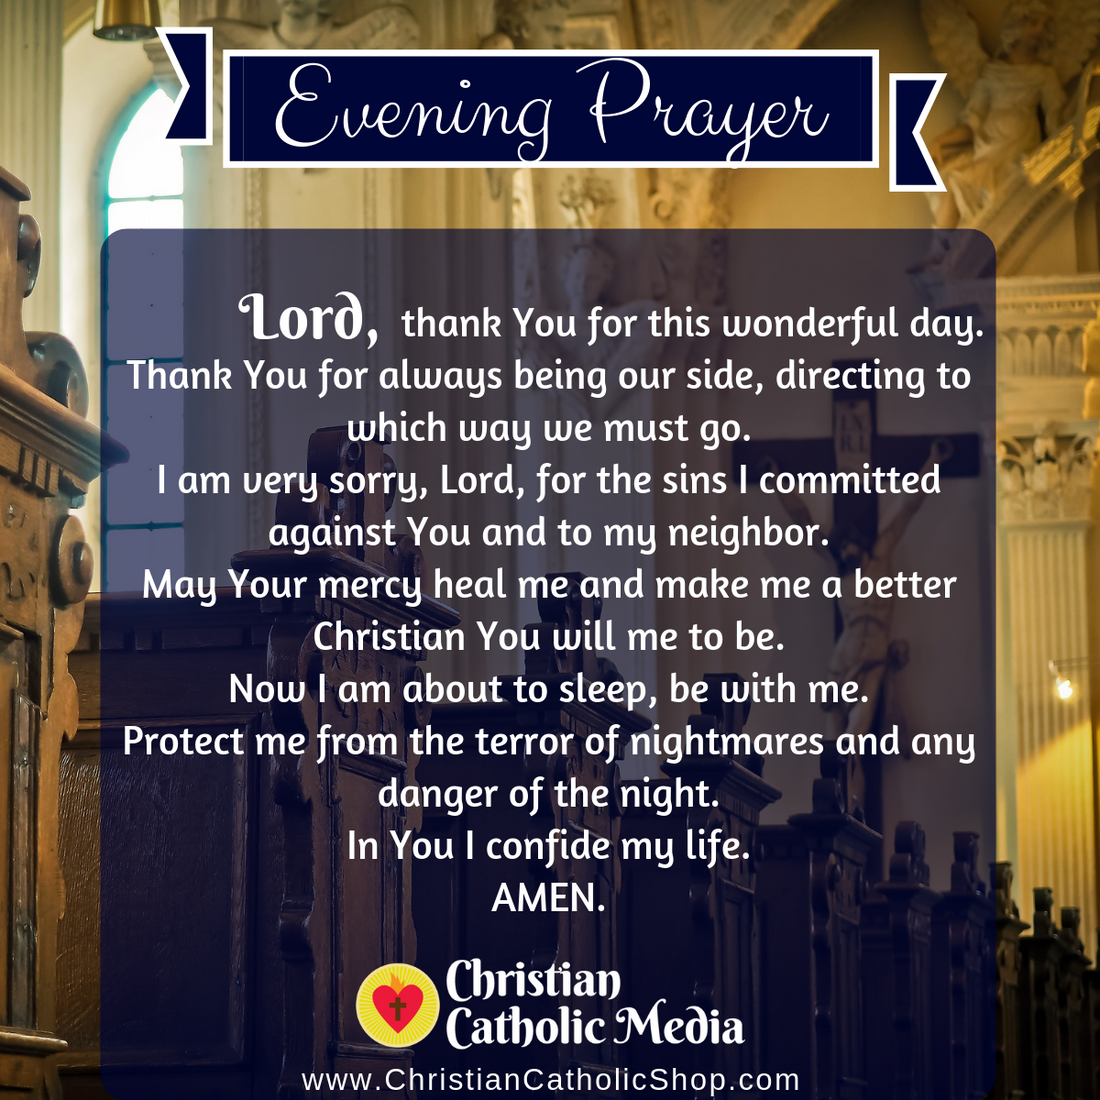 Evening Prayer Catholic Thursday 11-28-2019